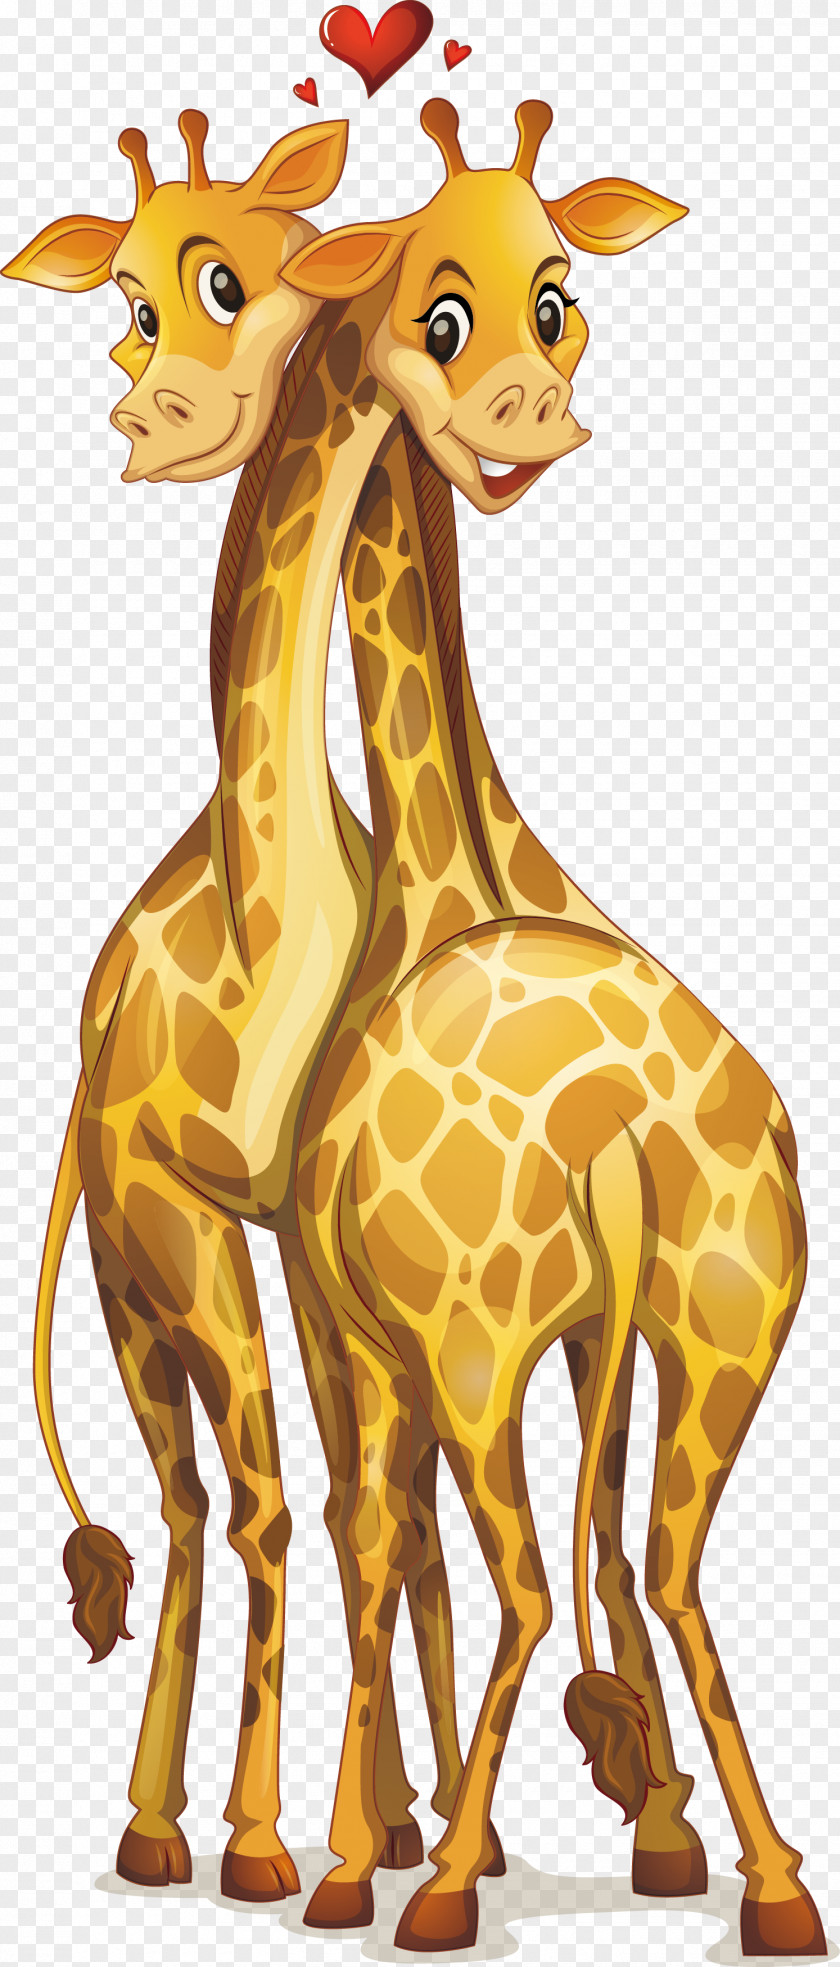 A Pair Of Giraffes Giraffe Cartoon Royalty-free Illustration PNG